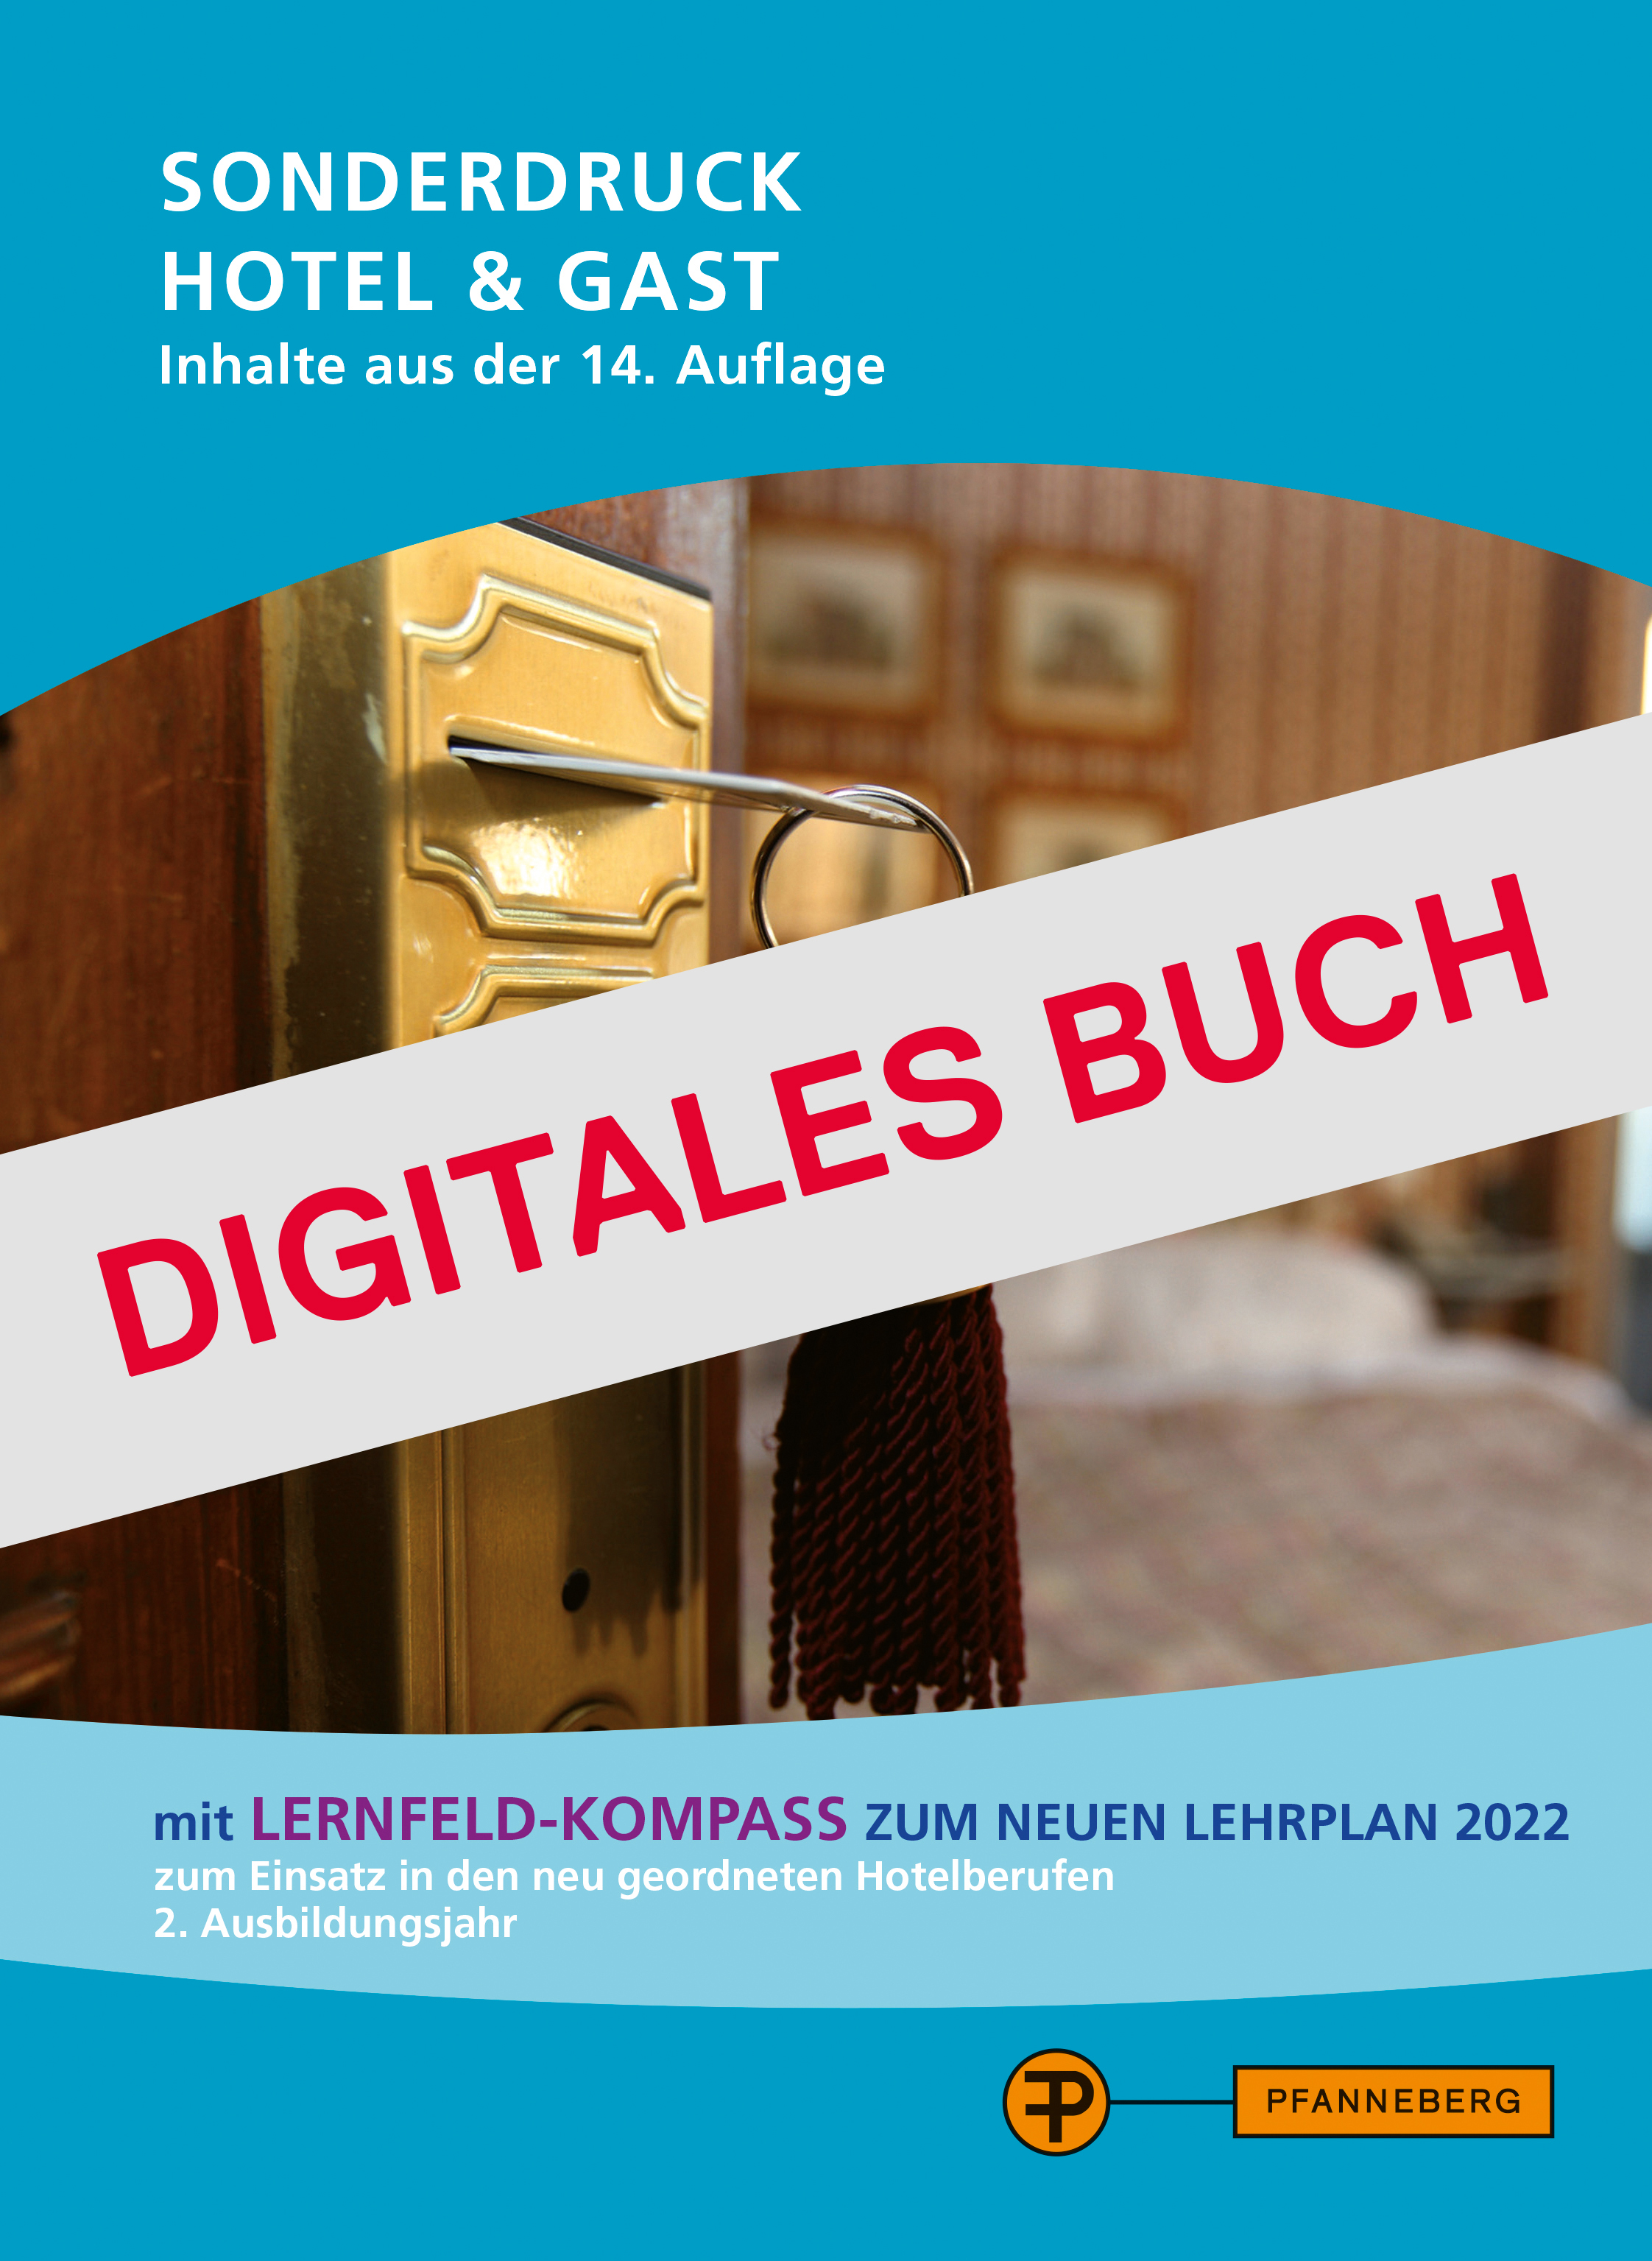 Sonderdruck Hotel & Gast - Digitales Buch